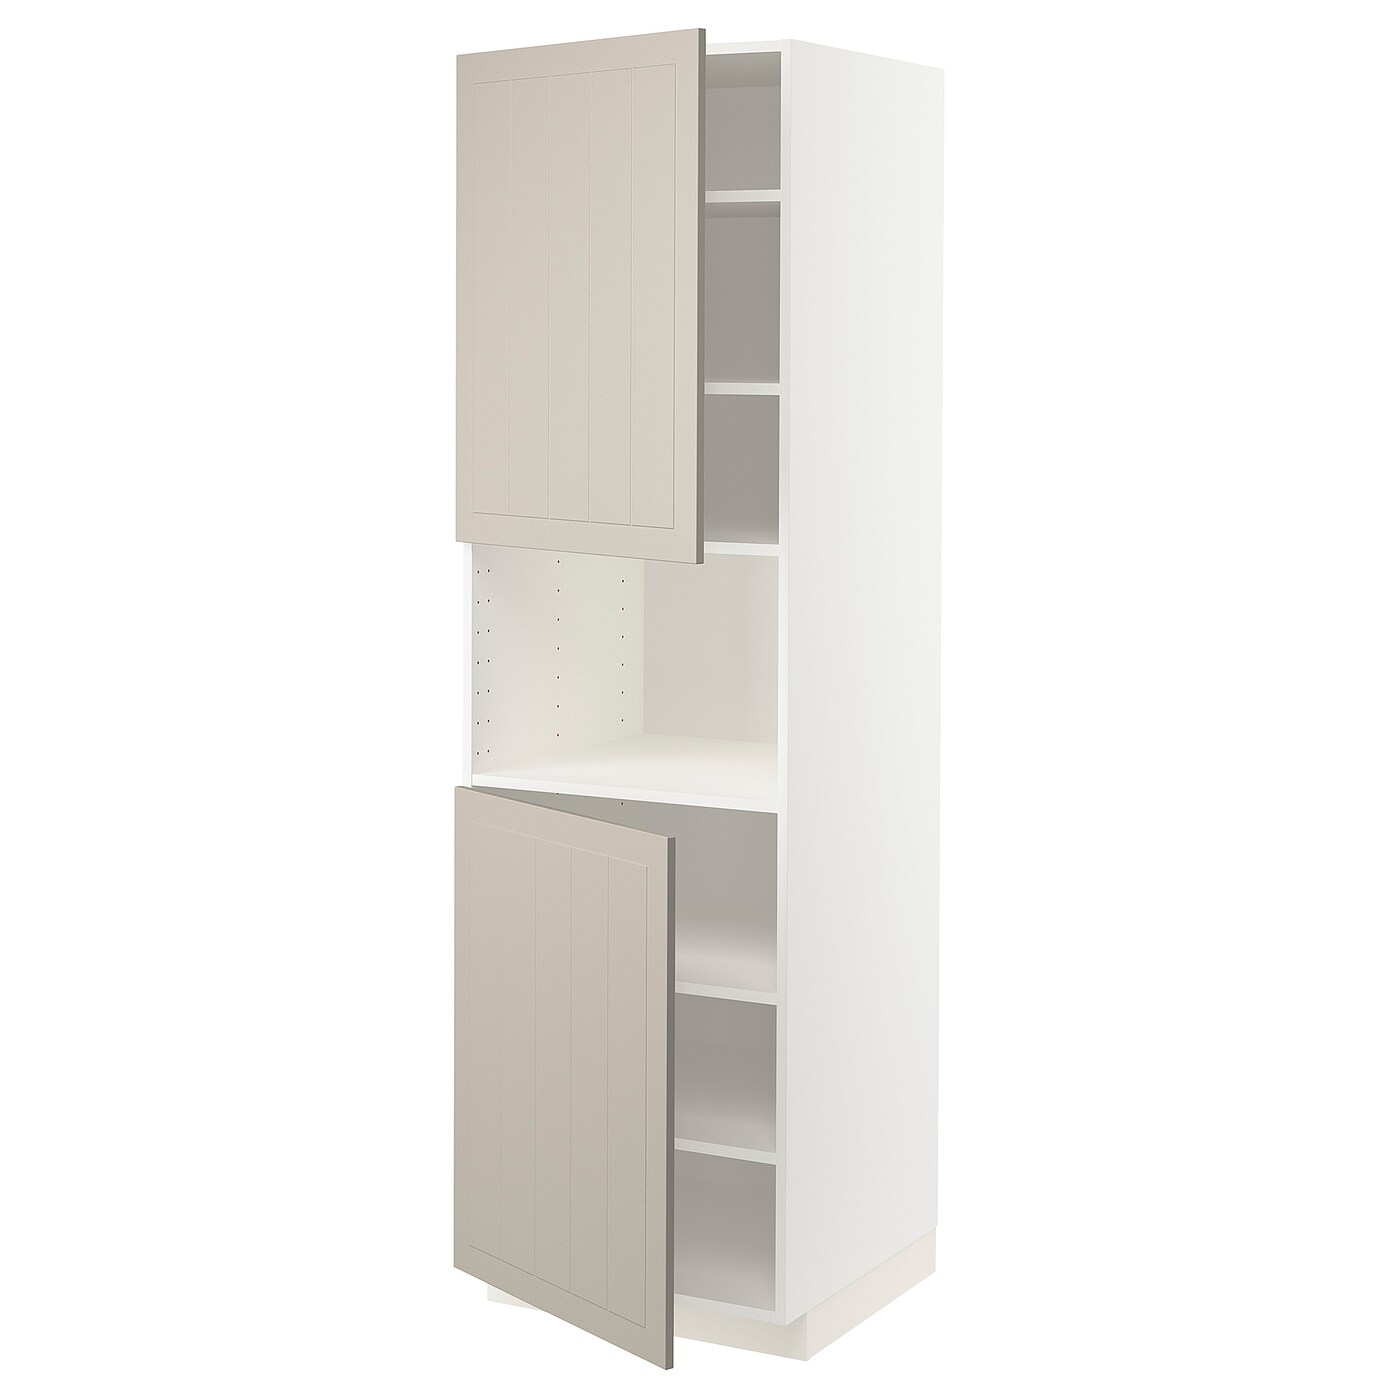 Высокий кухонный шкаф с полками - IKEA METOD/МЕТОД ИКЕА, 200х60х60 см, белый/бежевый